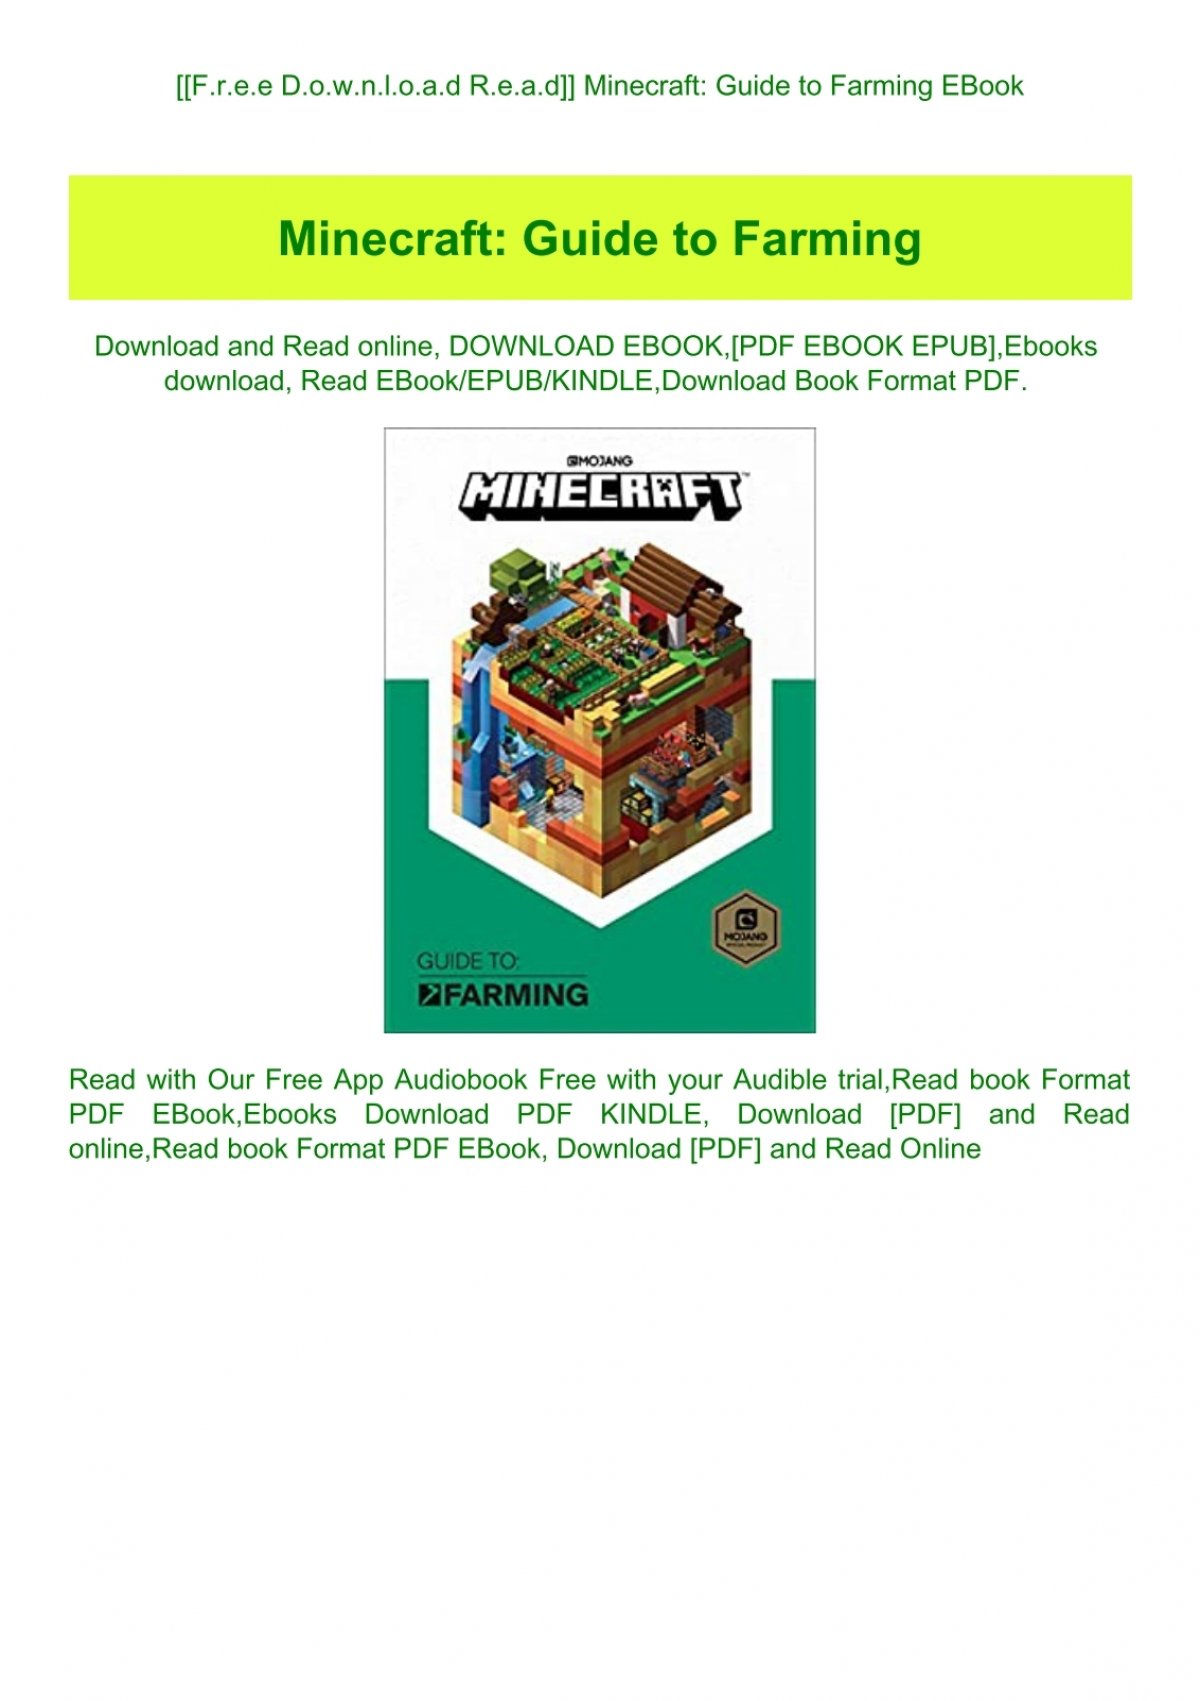 F R E E D O W N L O A D R E A D Minecraft Guide To Farming Ebook